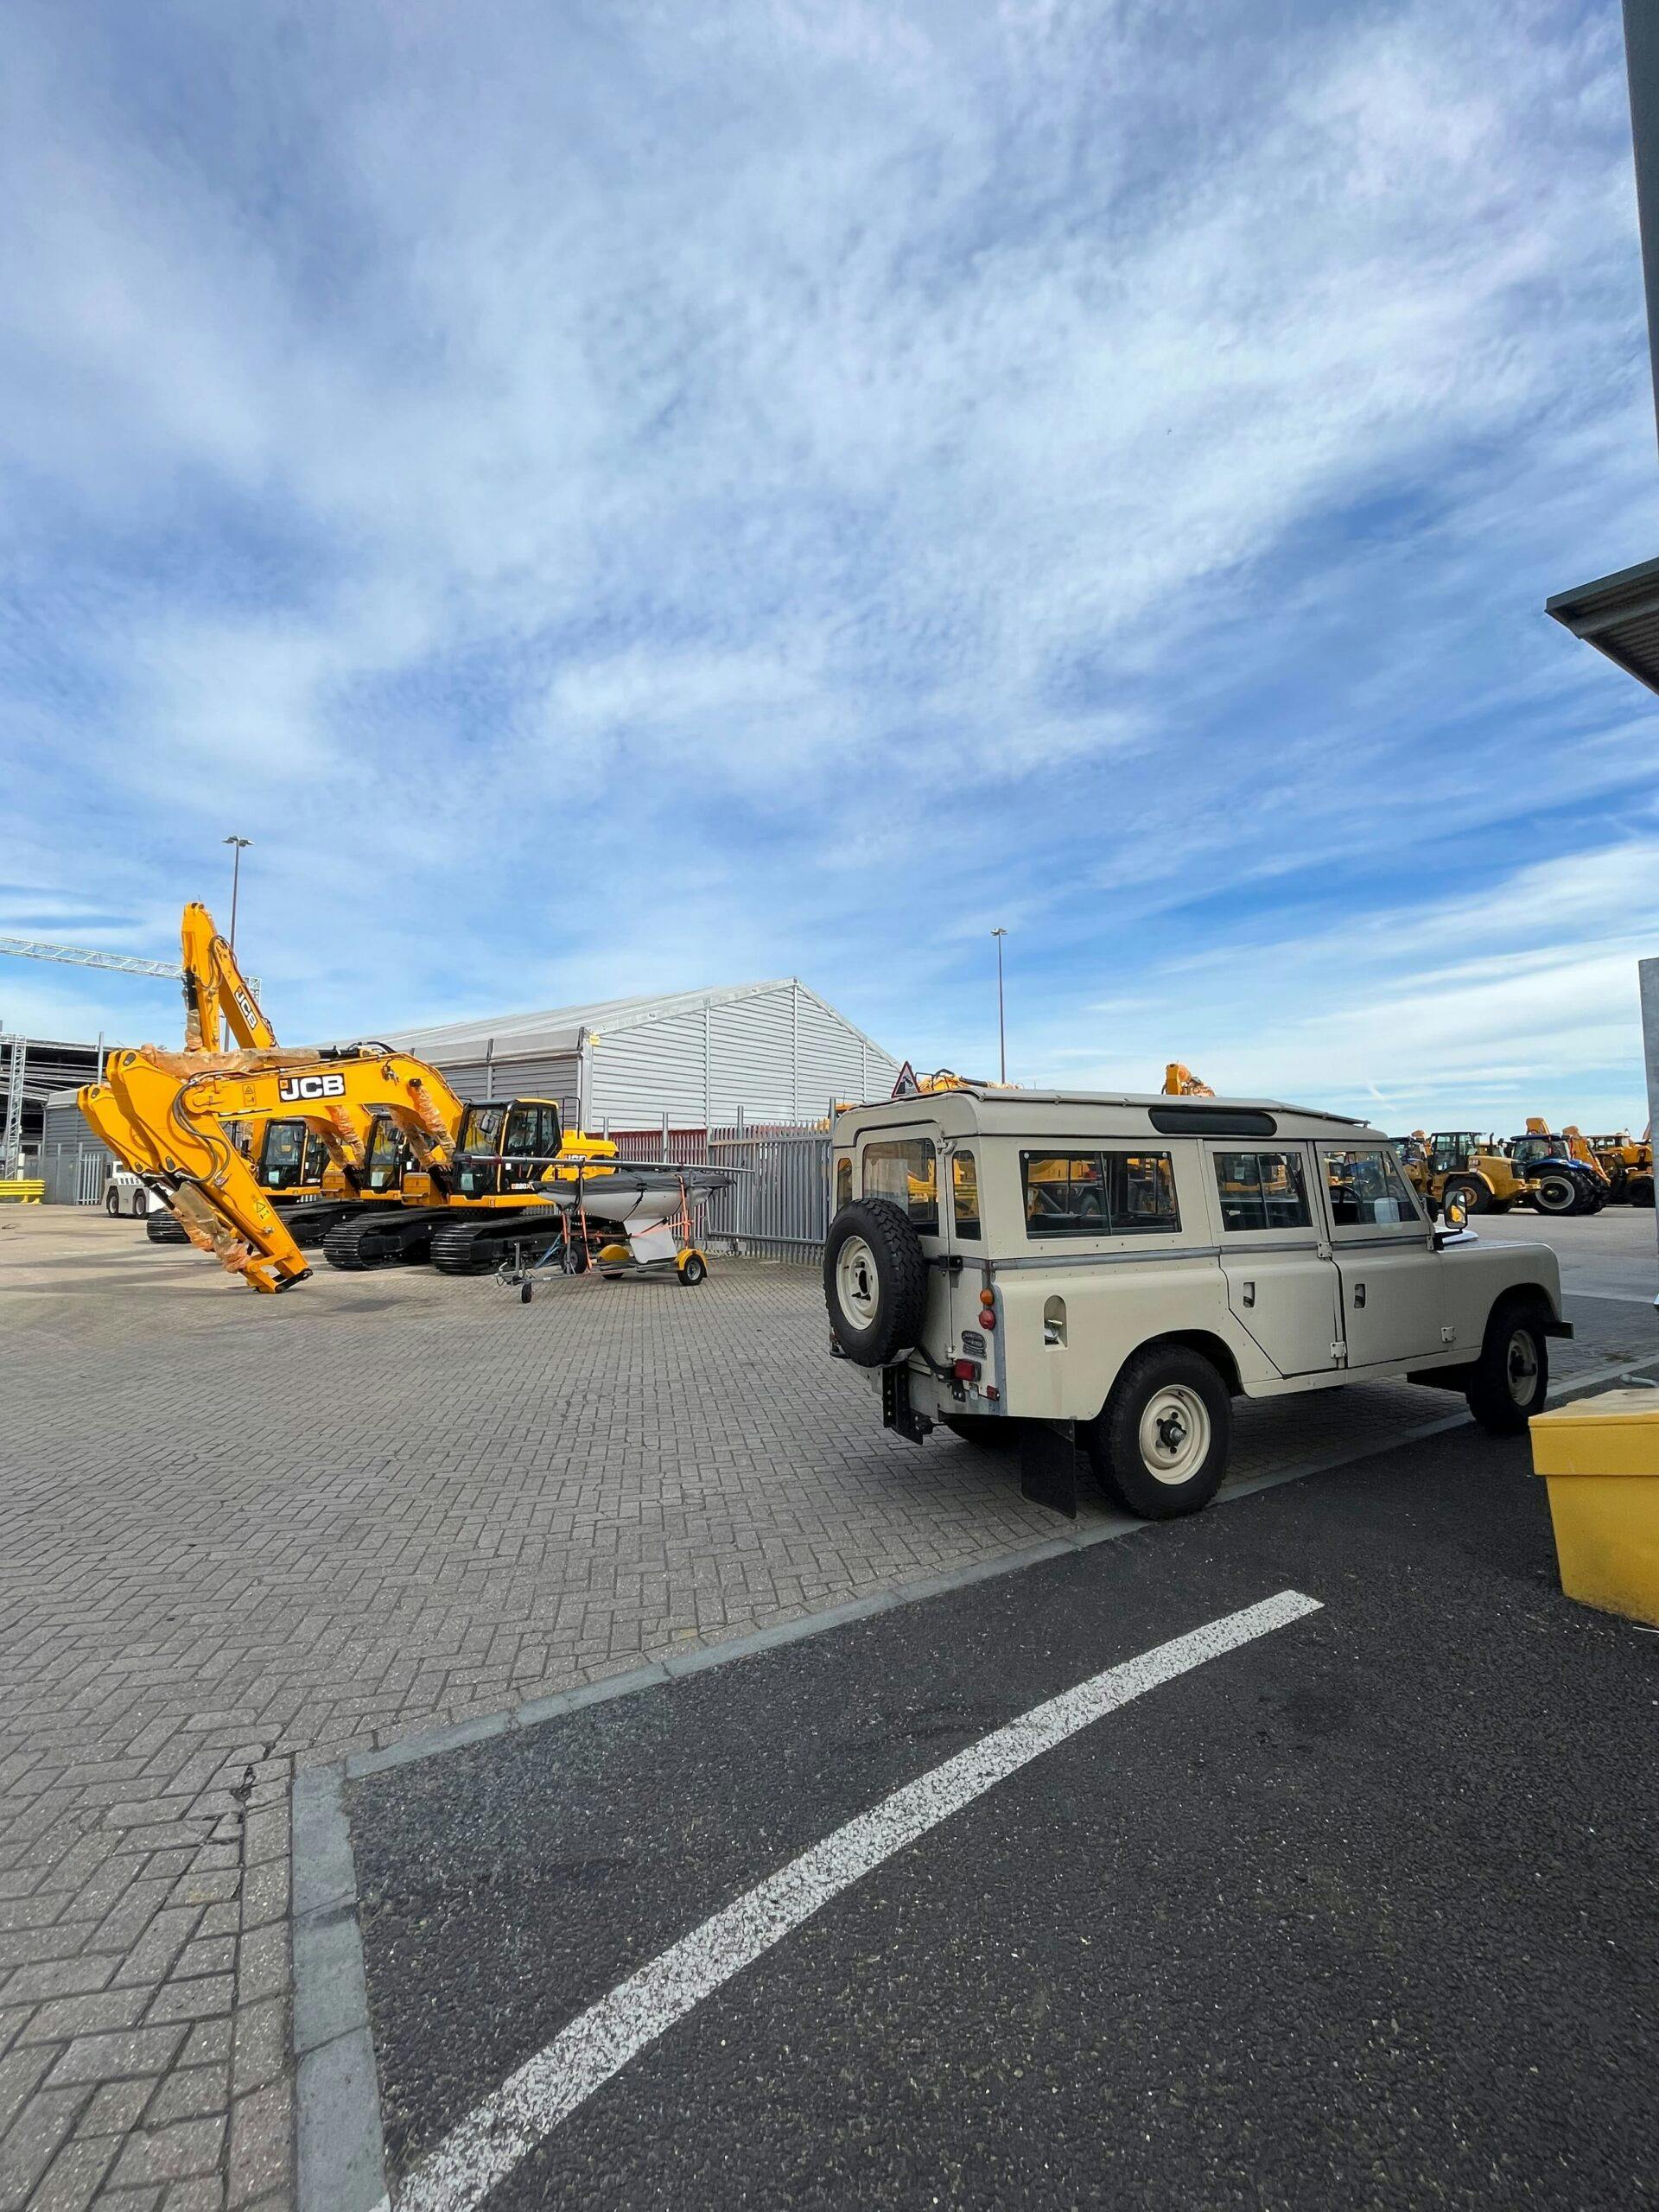 Land Rover Aaron Robinson port parking lot